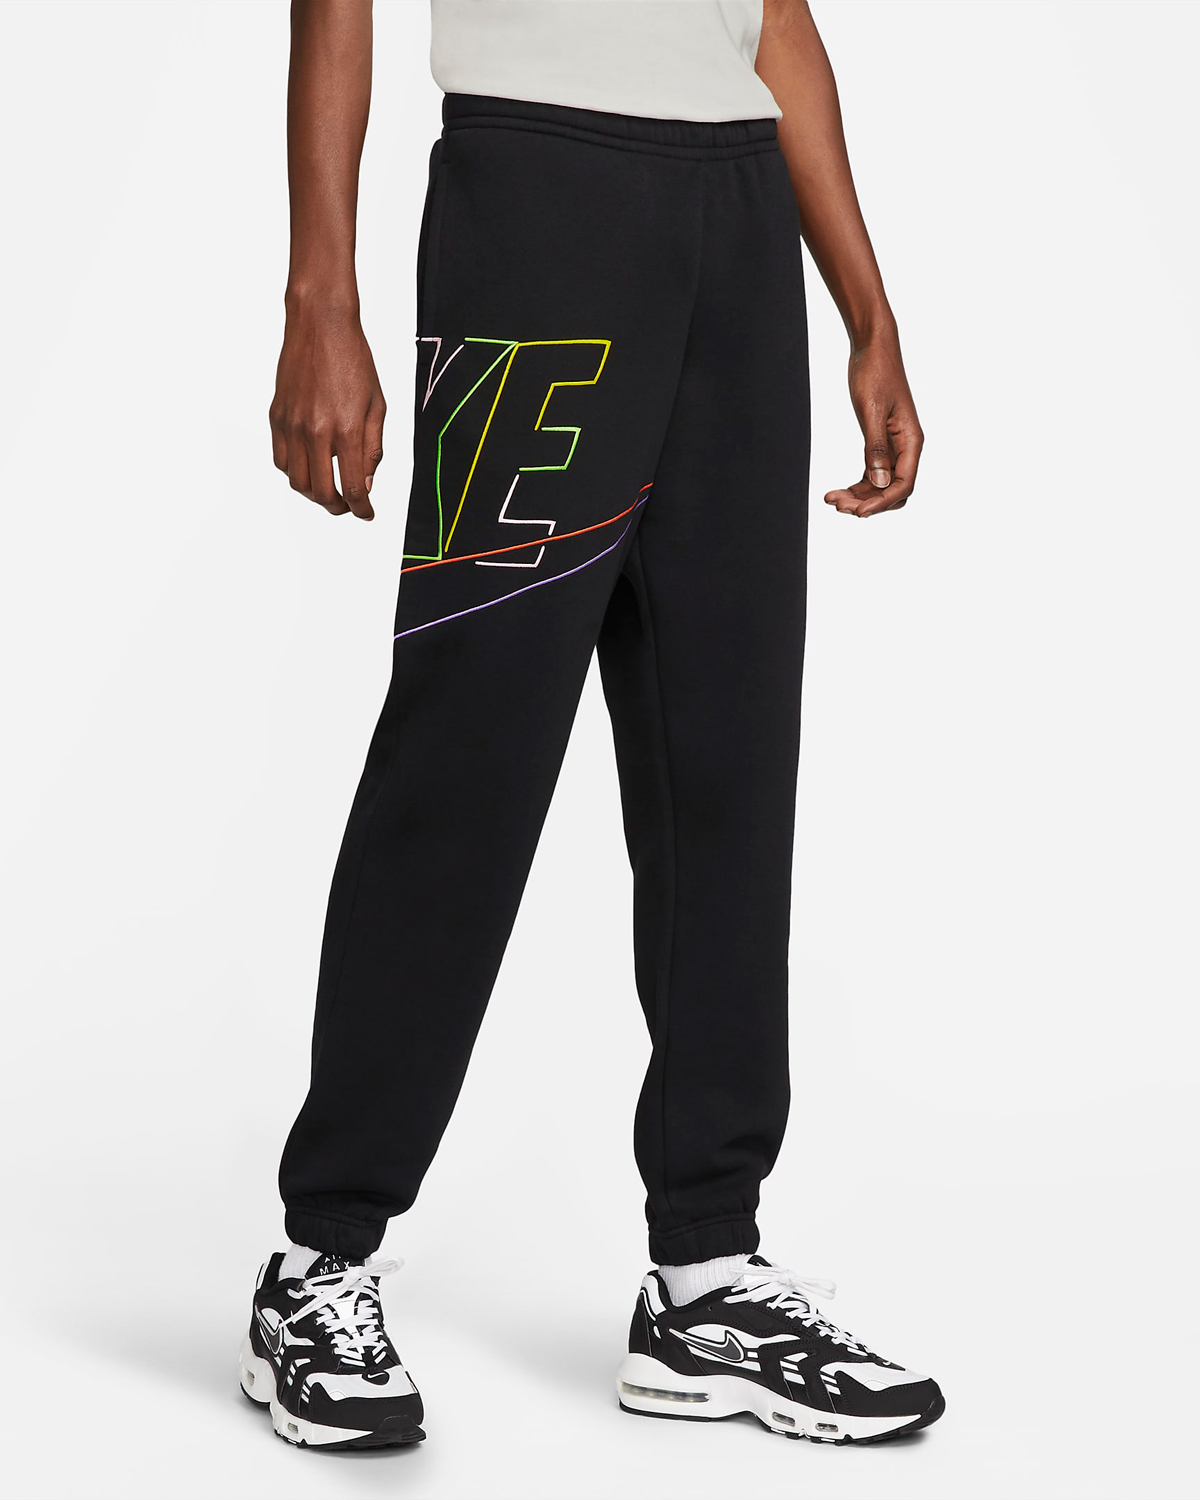 Nike-Club-Fleece-Pants-Black-Multi-Color-1